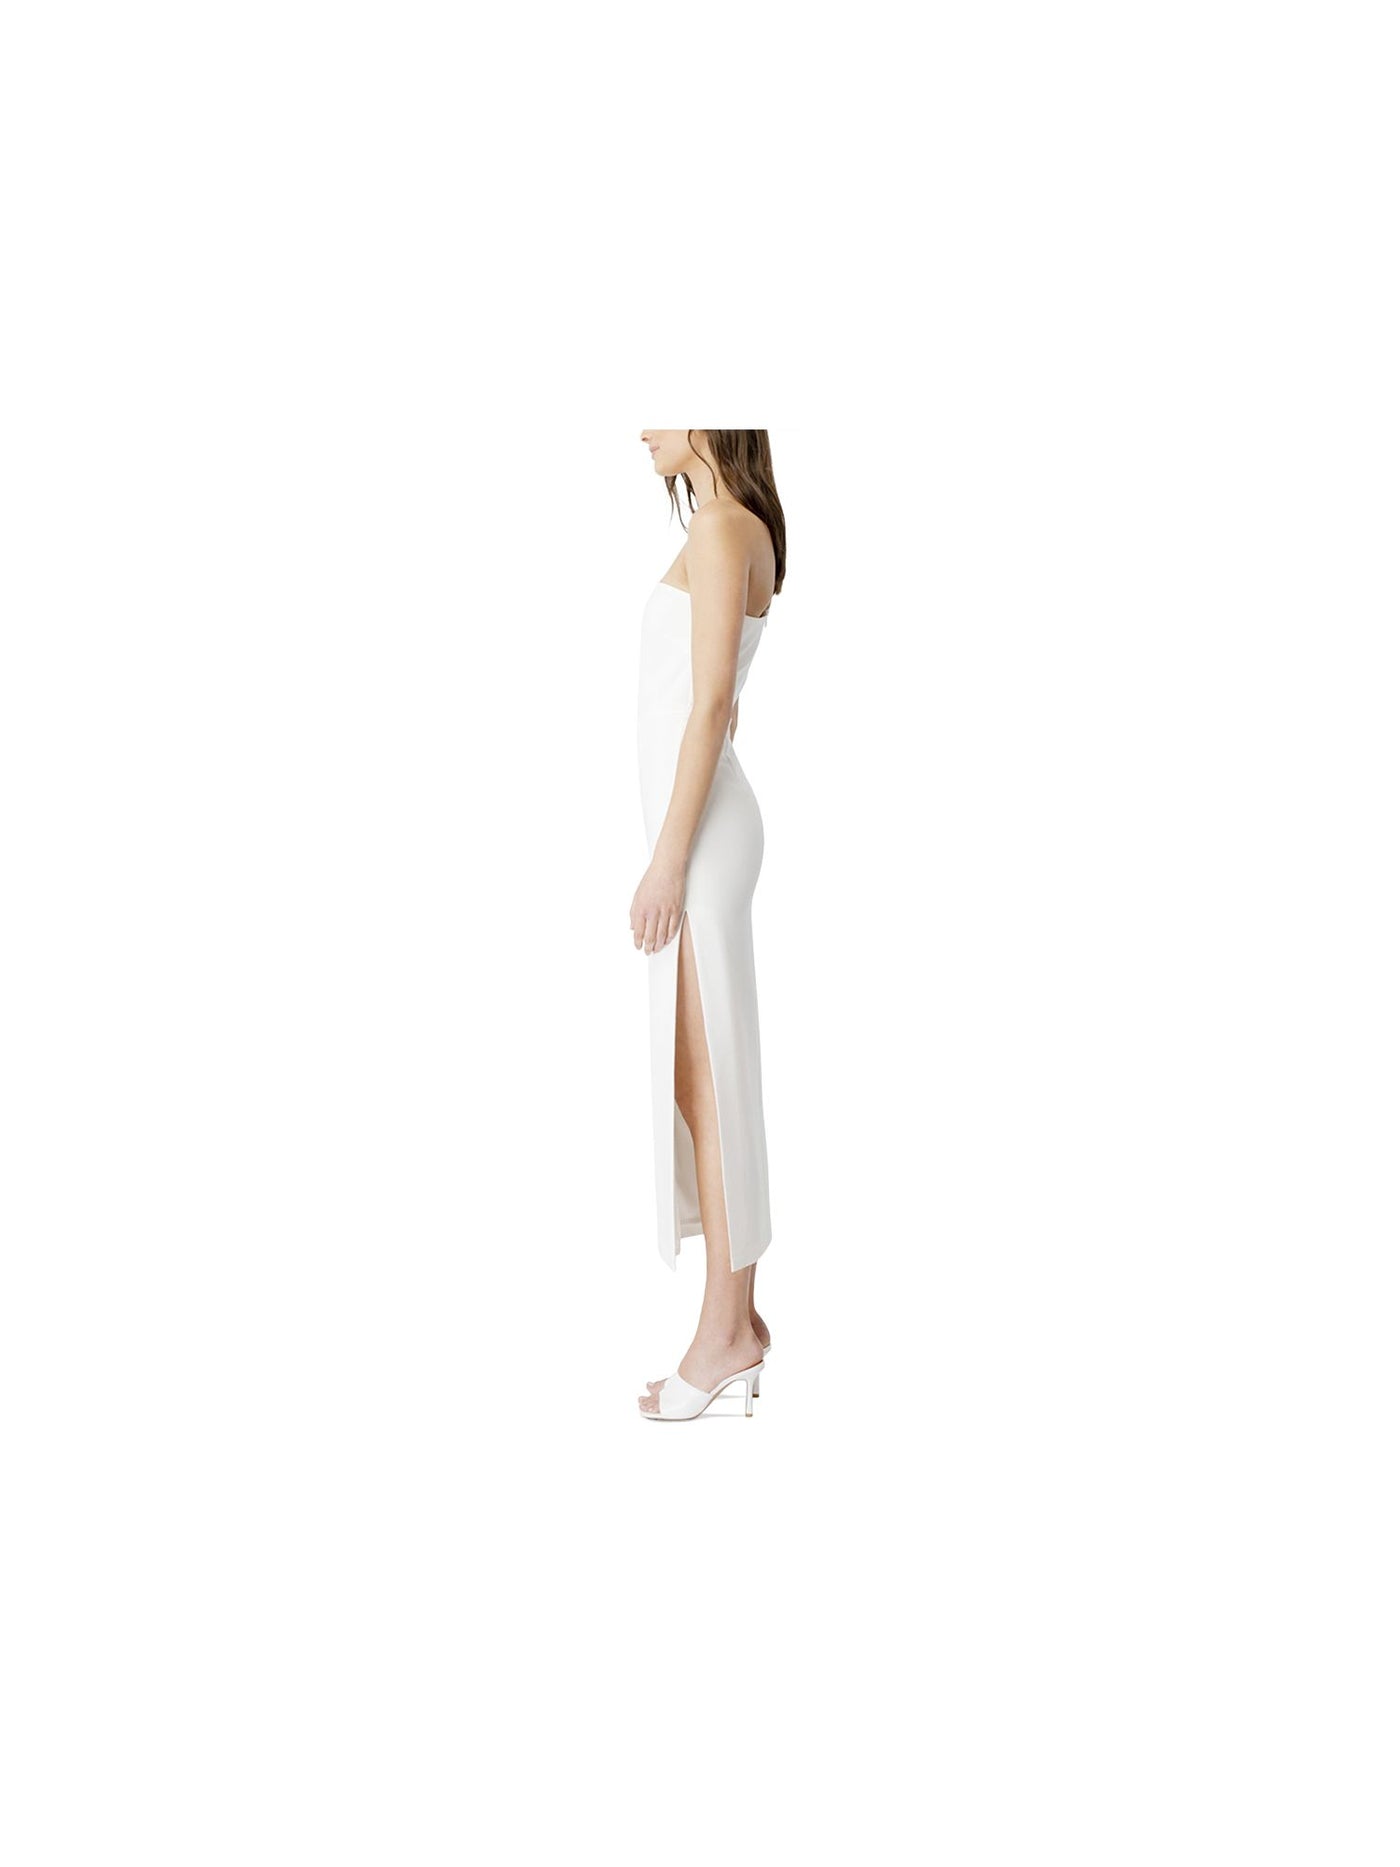 BARDOT Womens White Zippered Cut Out Back Slit Lined Sleeveless Asymmetrical Neckline Midi Party Sheath Dress XXL